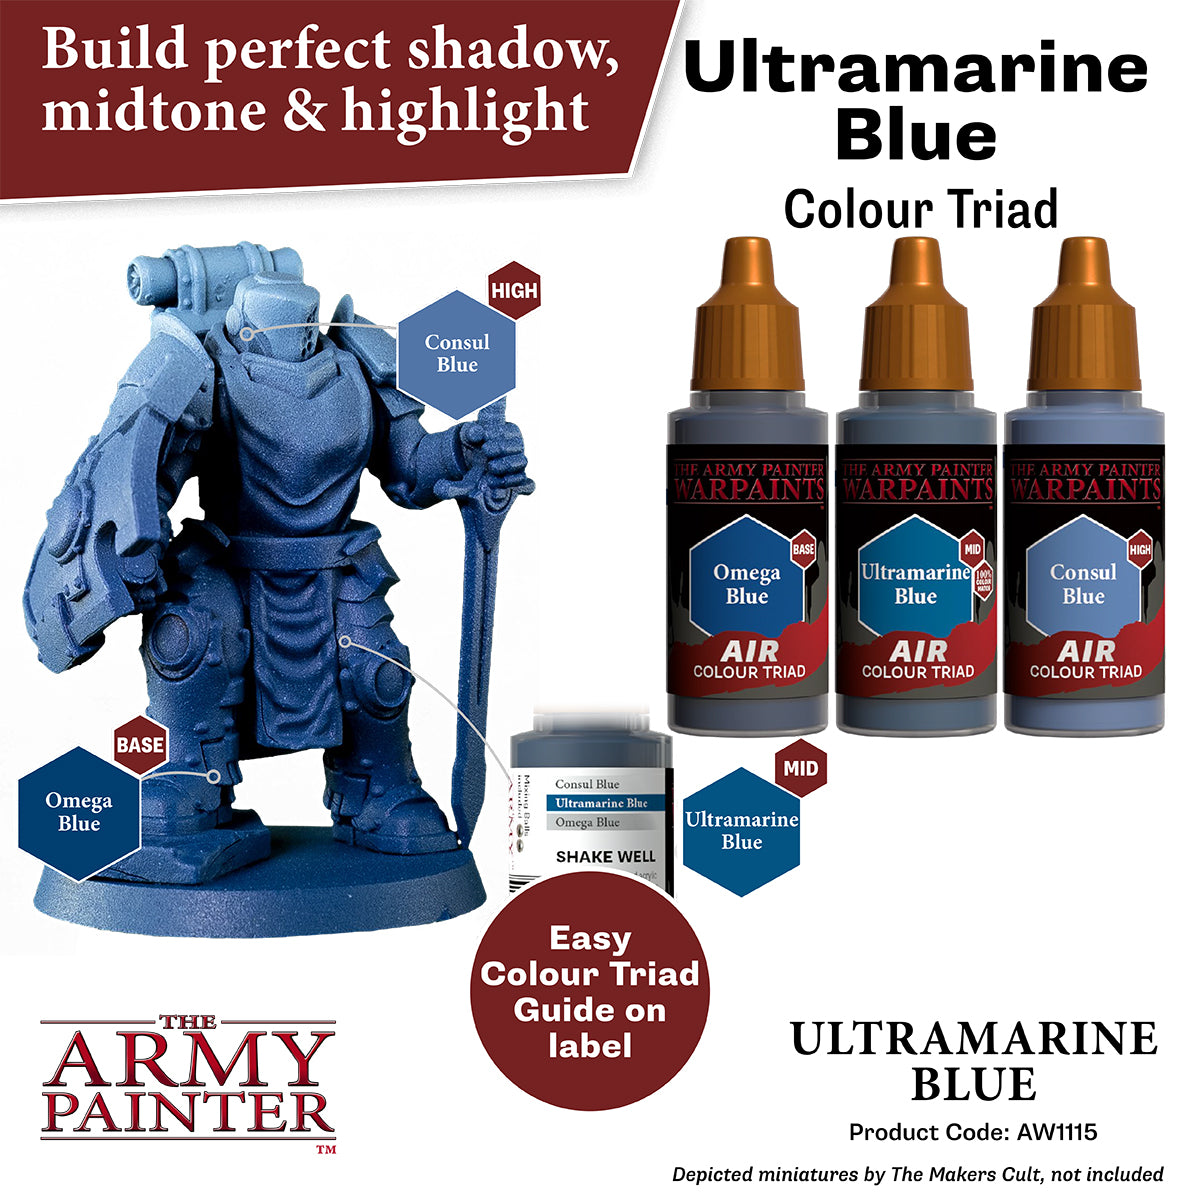 Warpaints Air: Ultramarine Blue